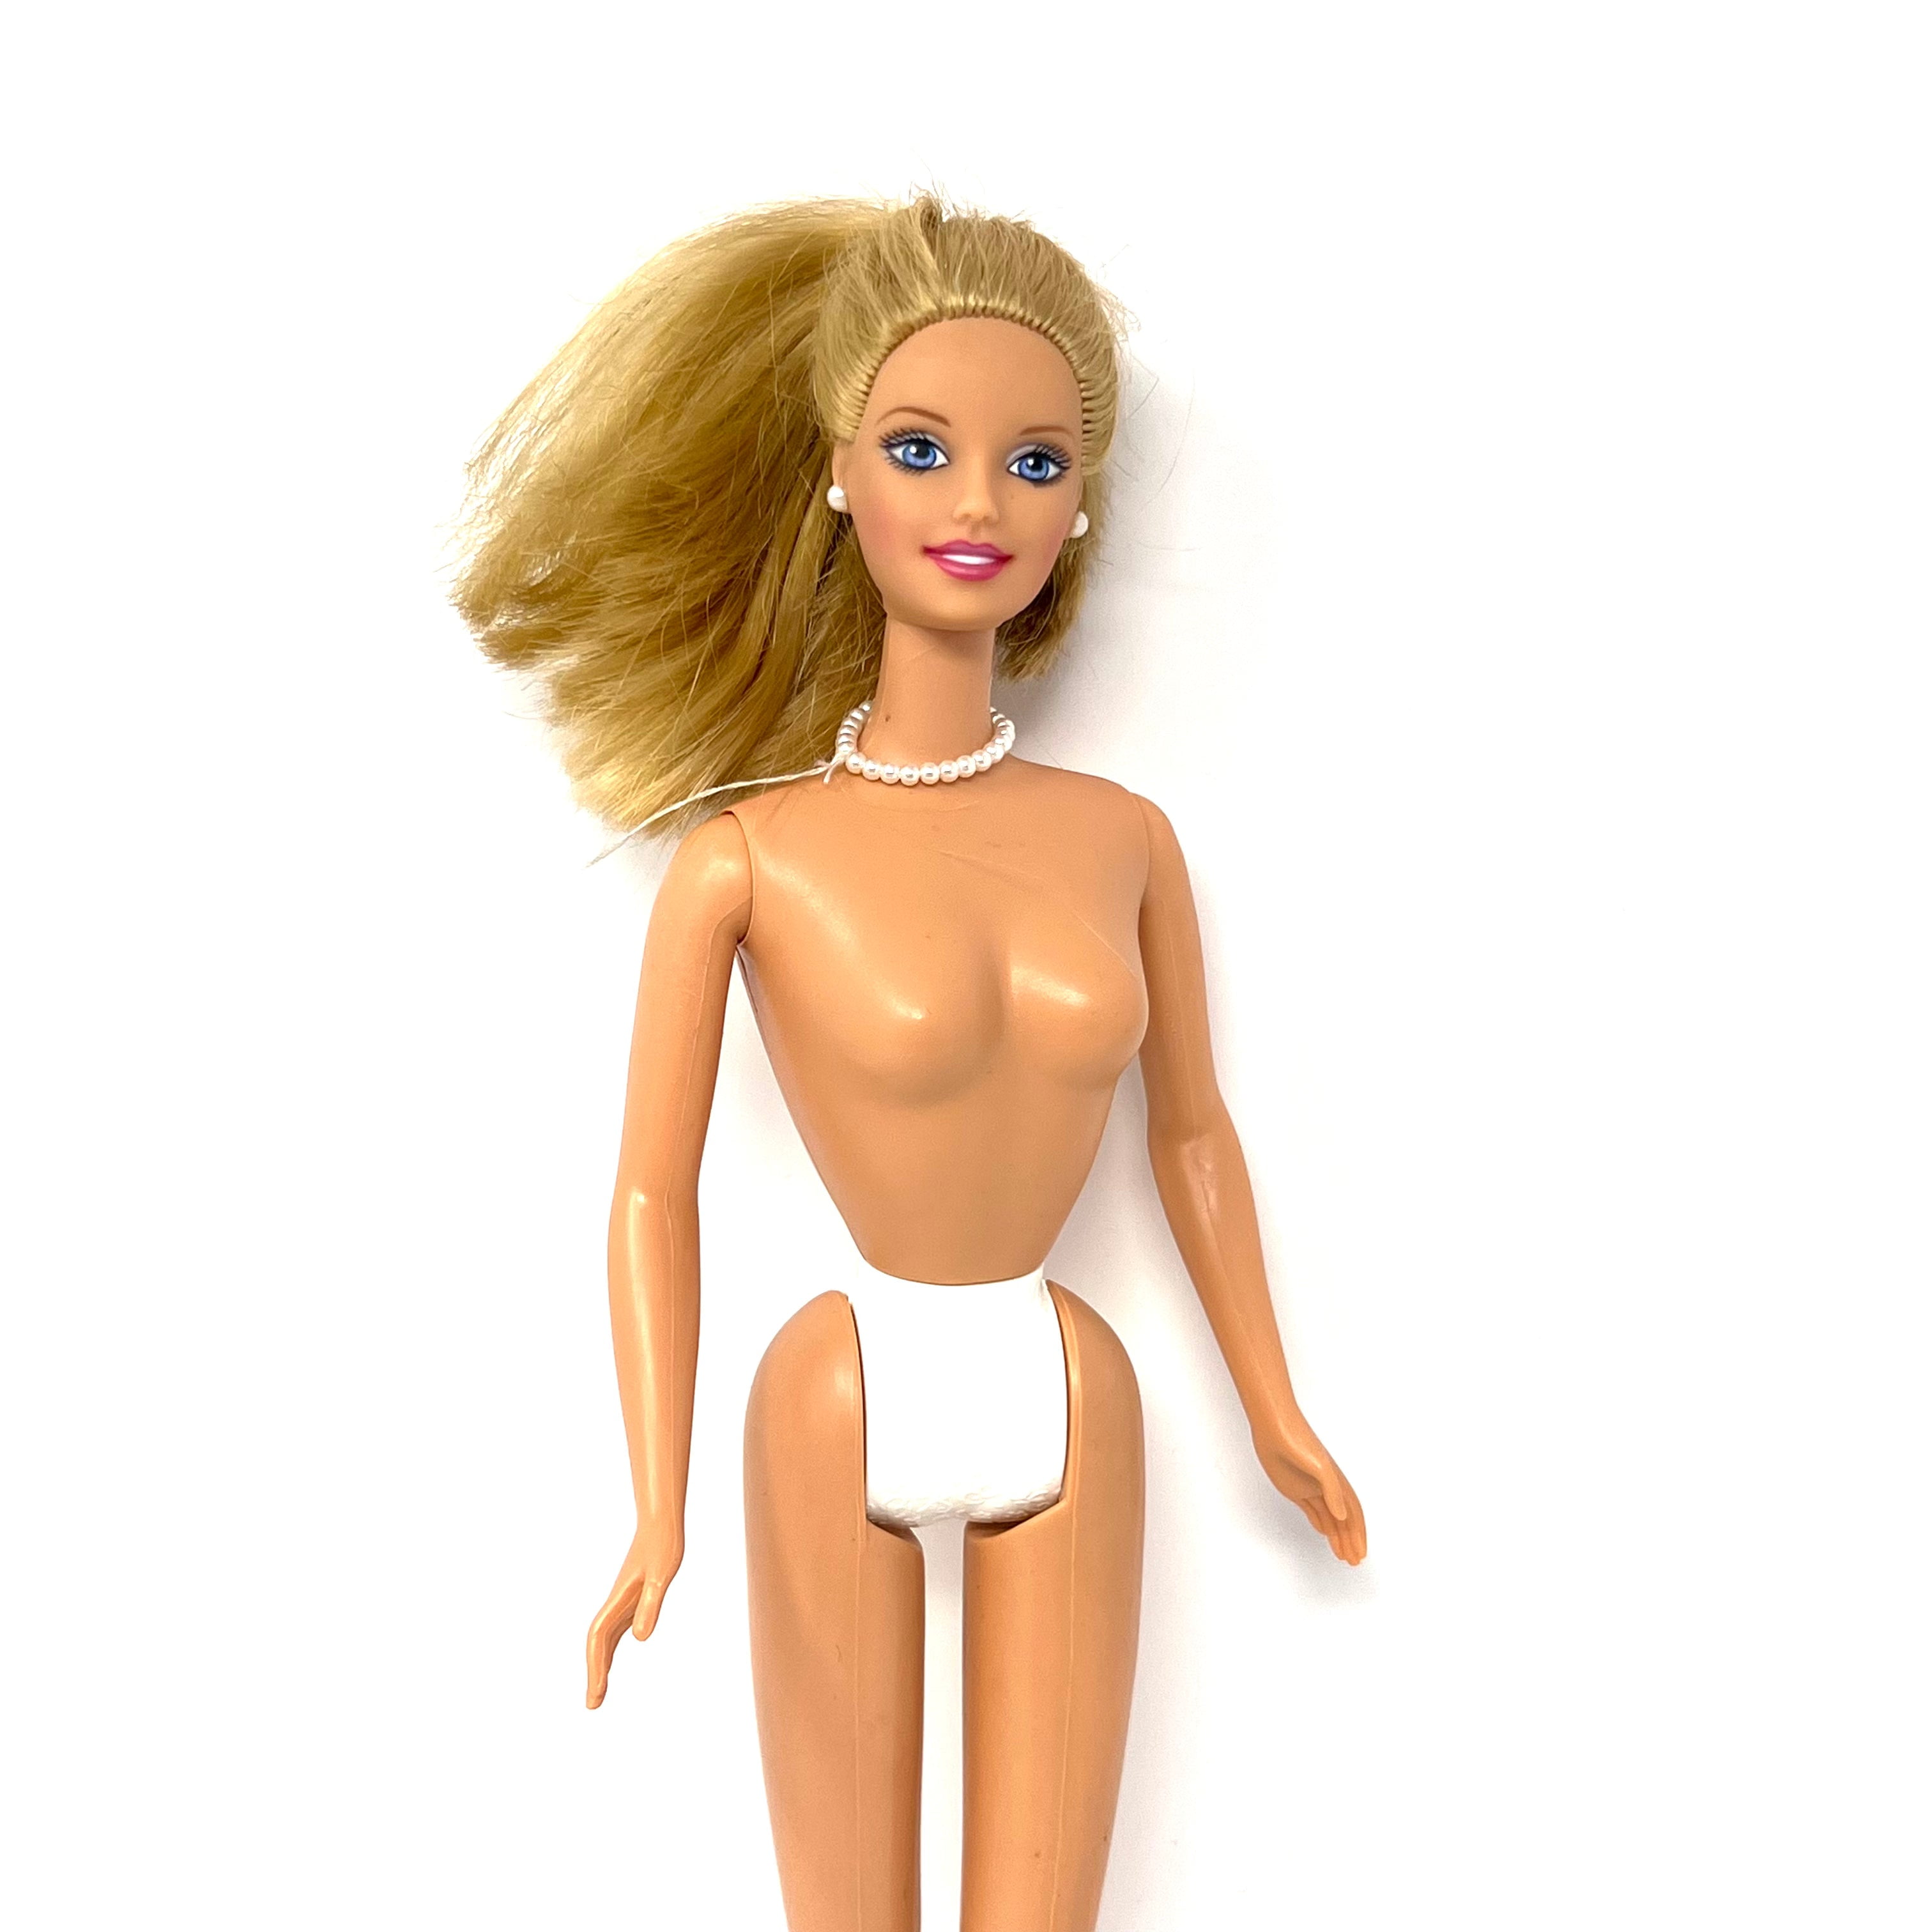 david pistorius add photo barbie doll porn pics